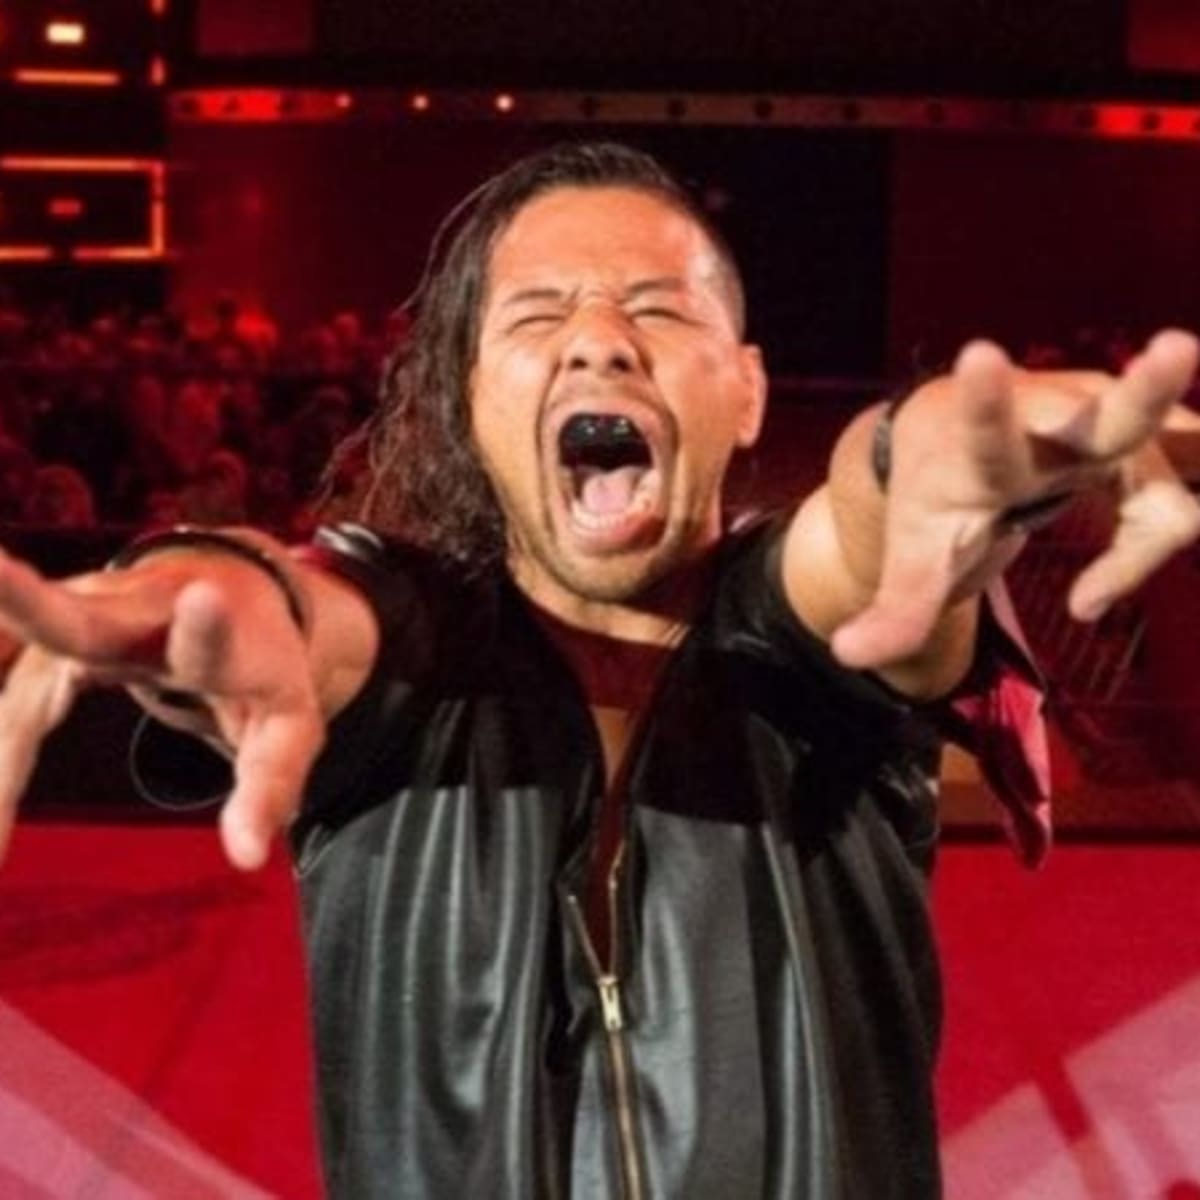 WWE News: Shinsuke Nakamura Comments on His Return to Japan, New